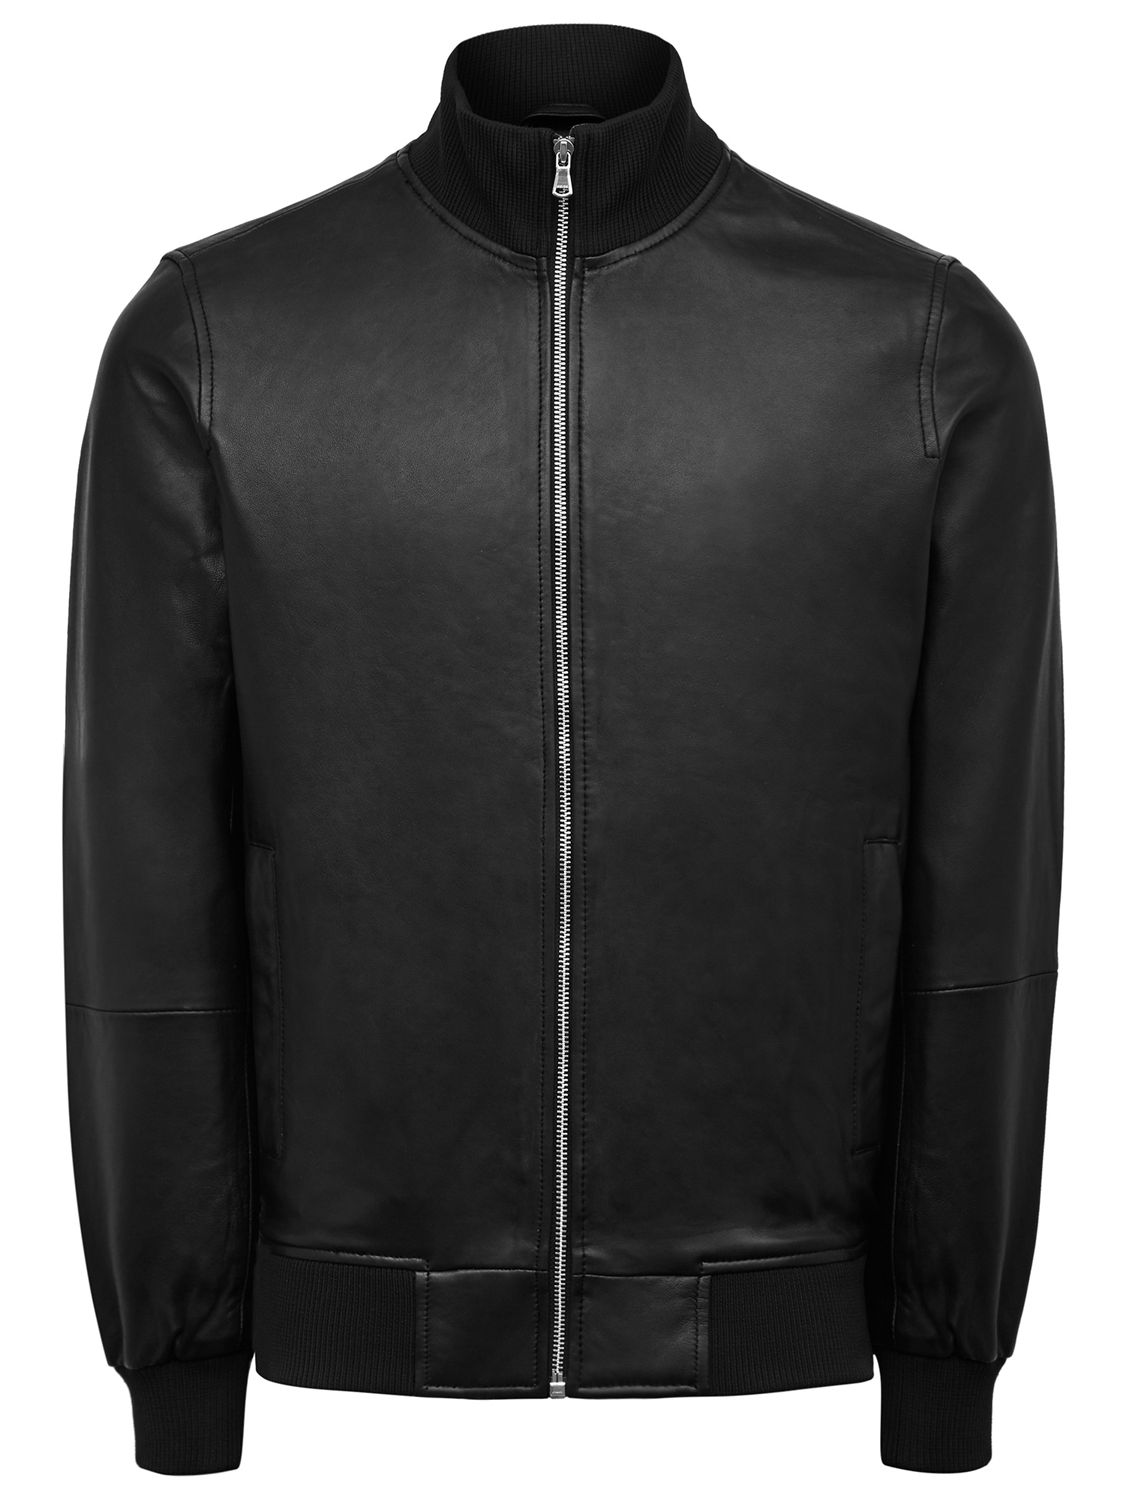 Reiss Mars Leather Bomber Jacket, Black at John Lewis & Partners